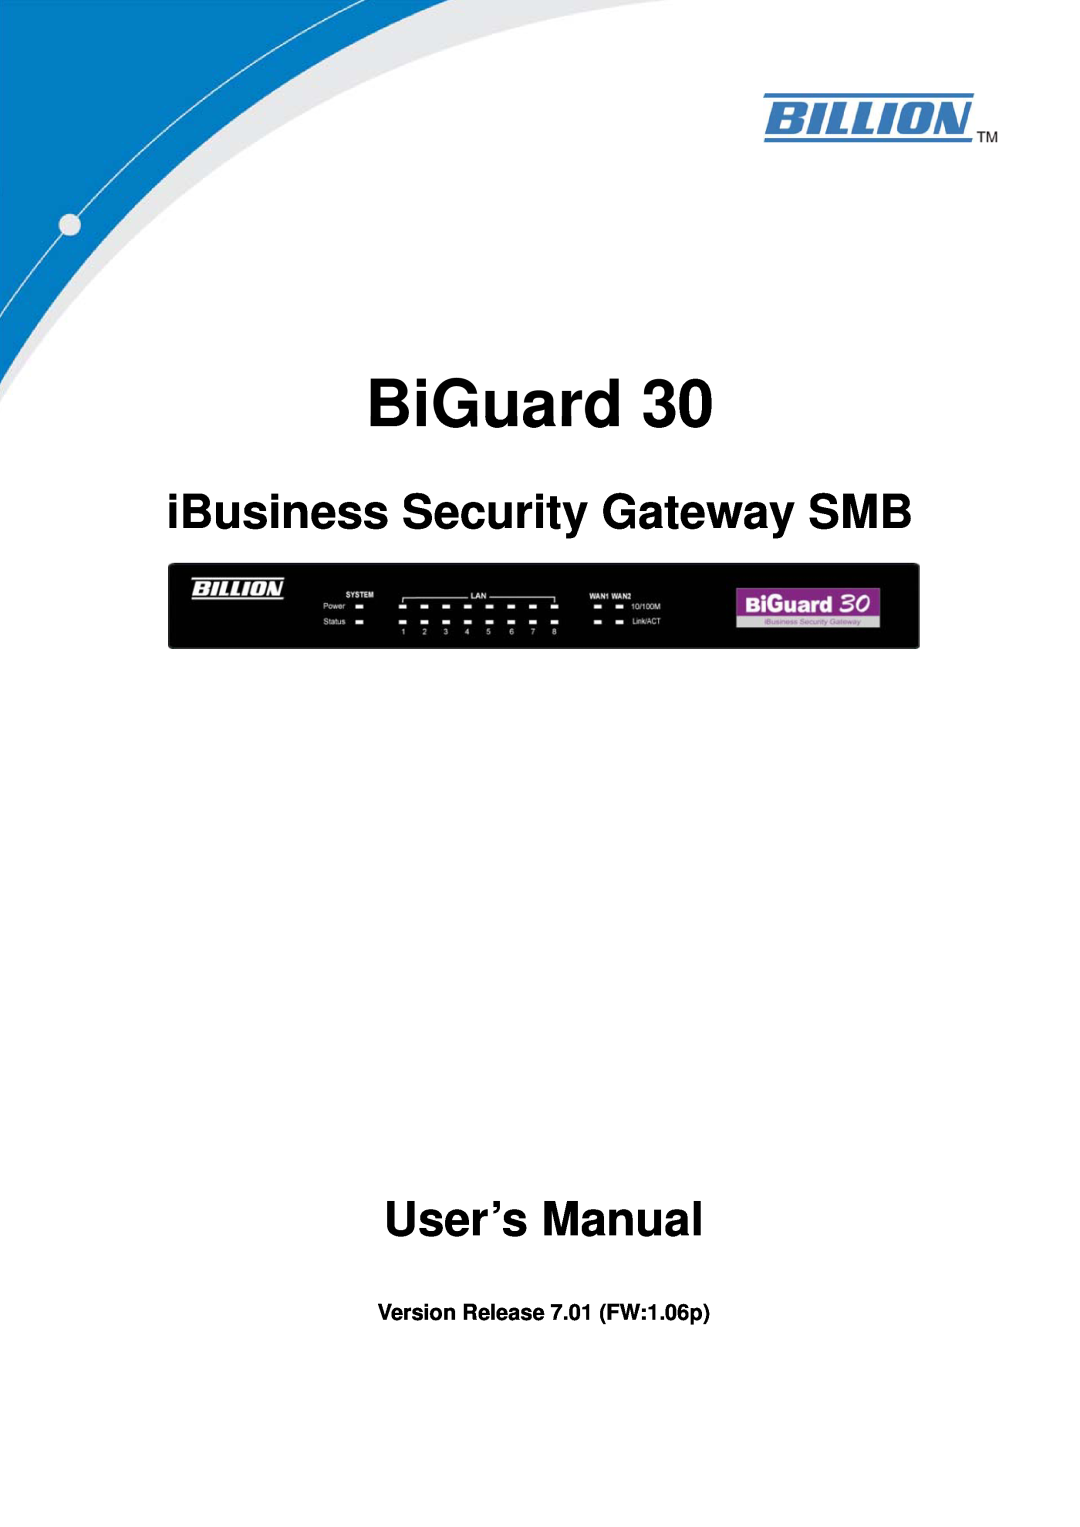 Billion Electric Company 30 user manual Version Release 7.01 FW1.06p, BiGuard 